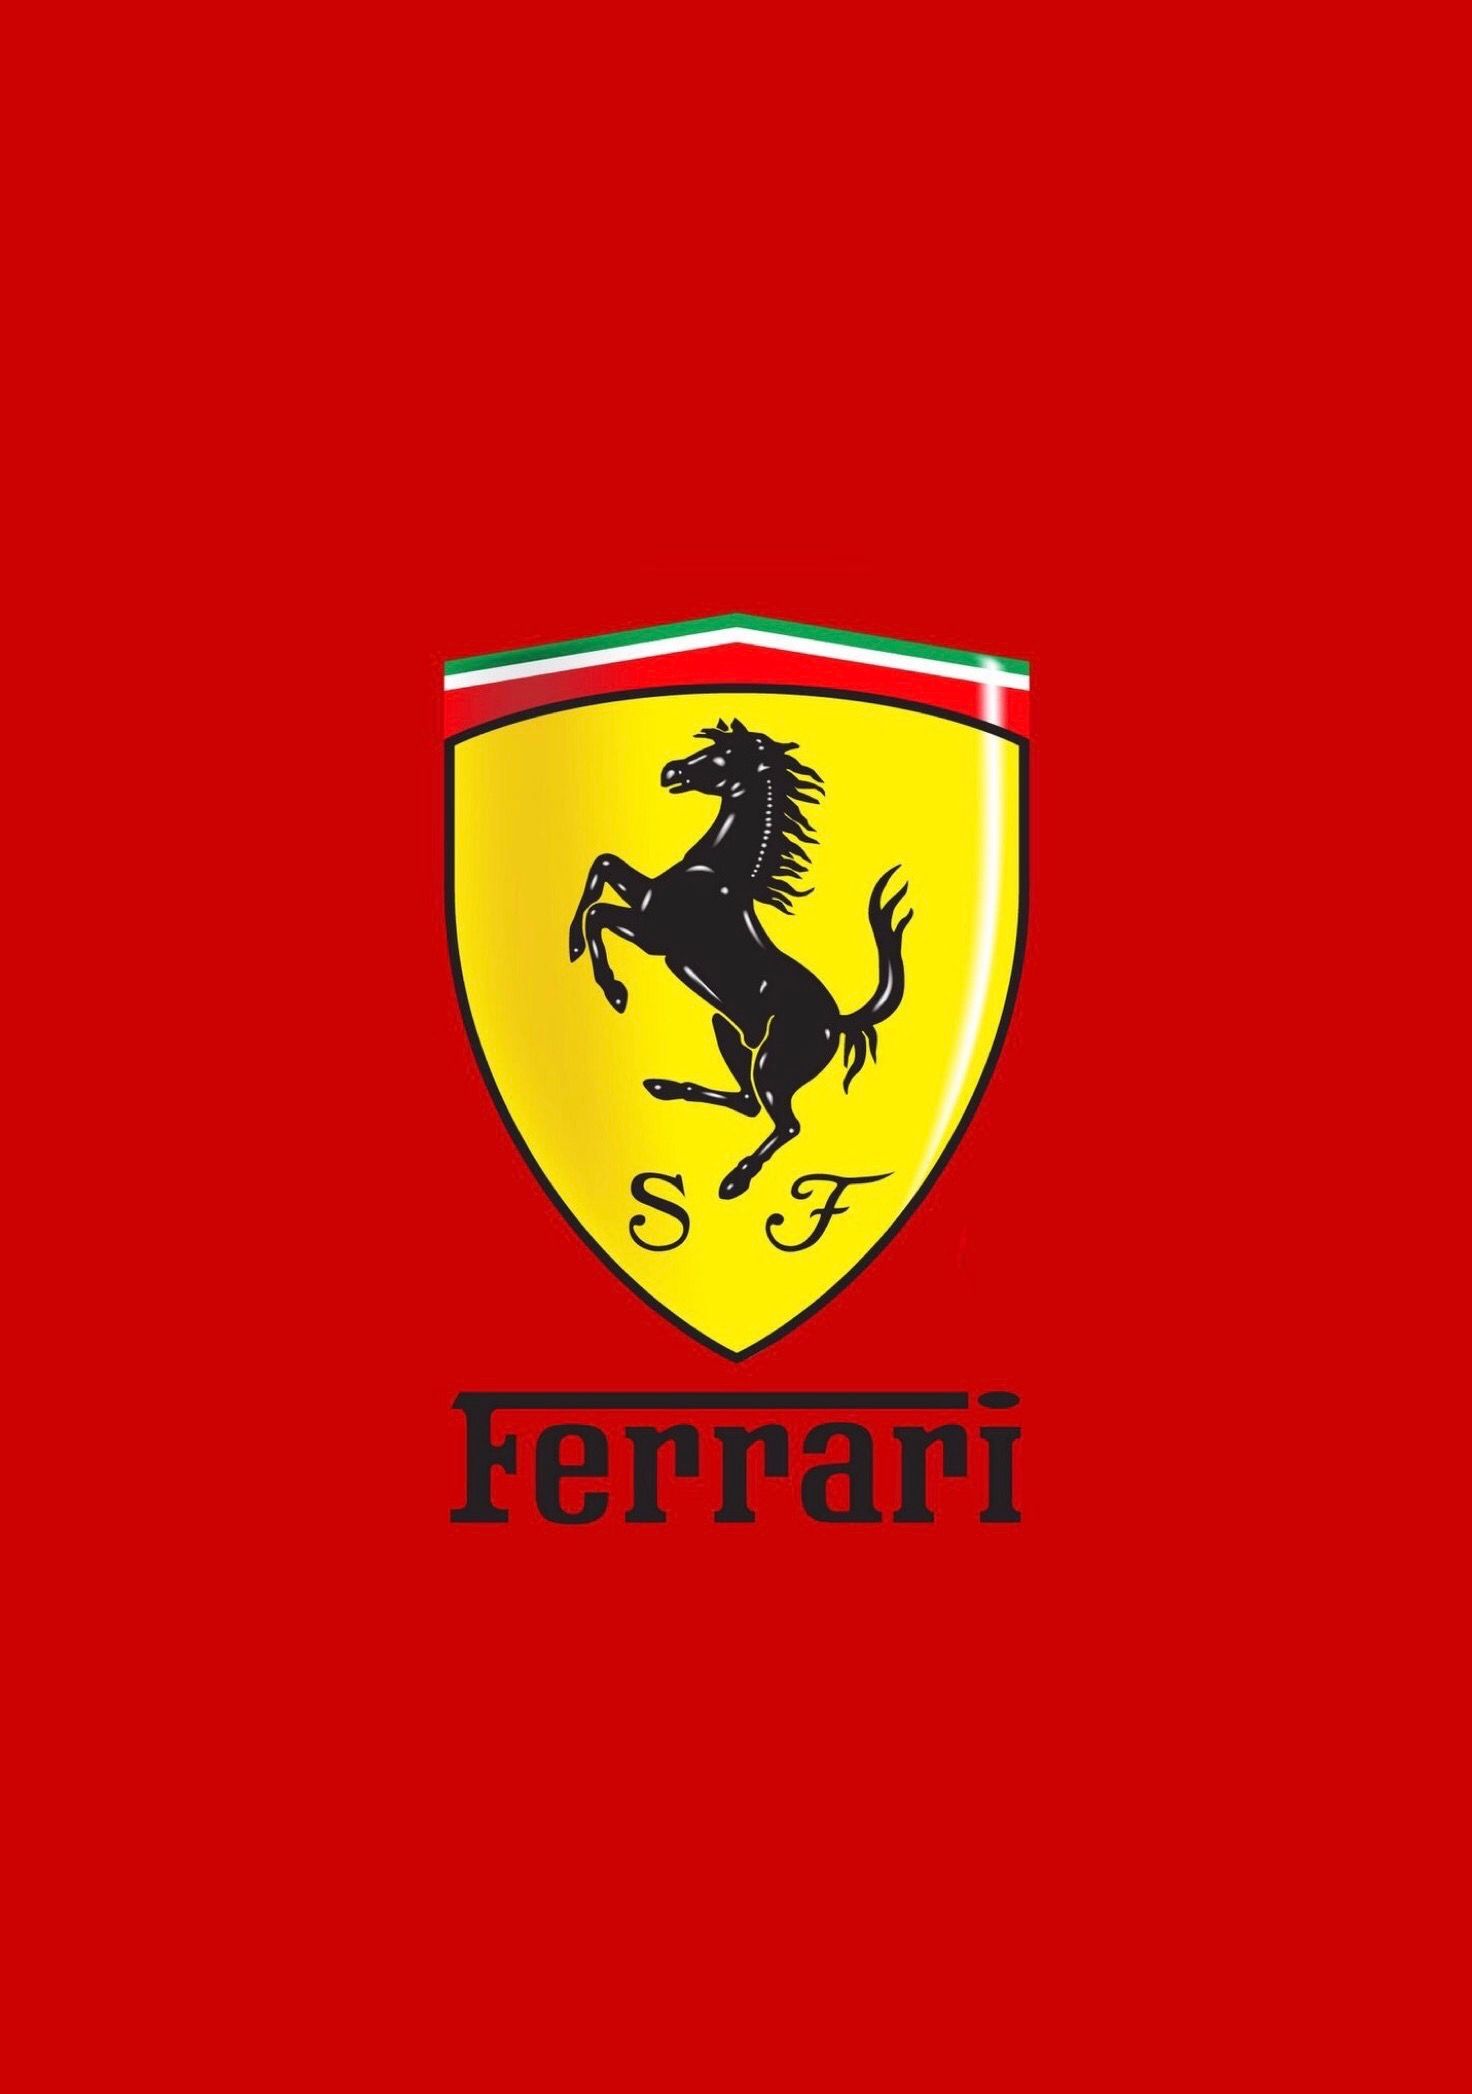 Cool ferrari logo wallpapers